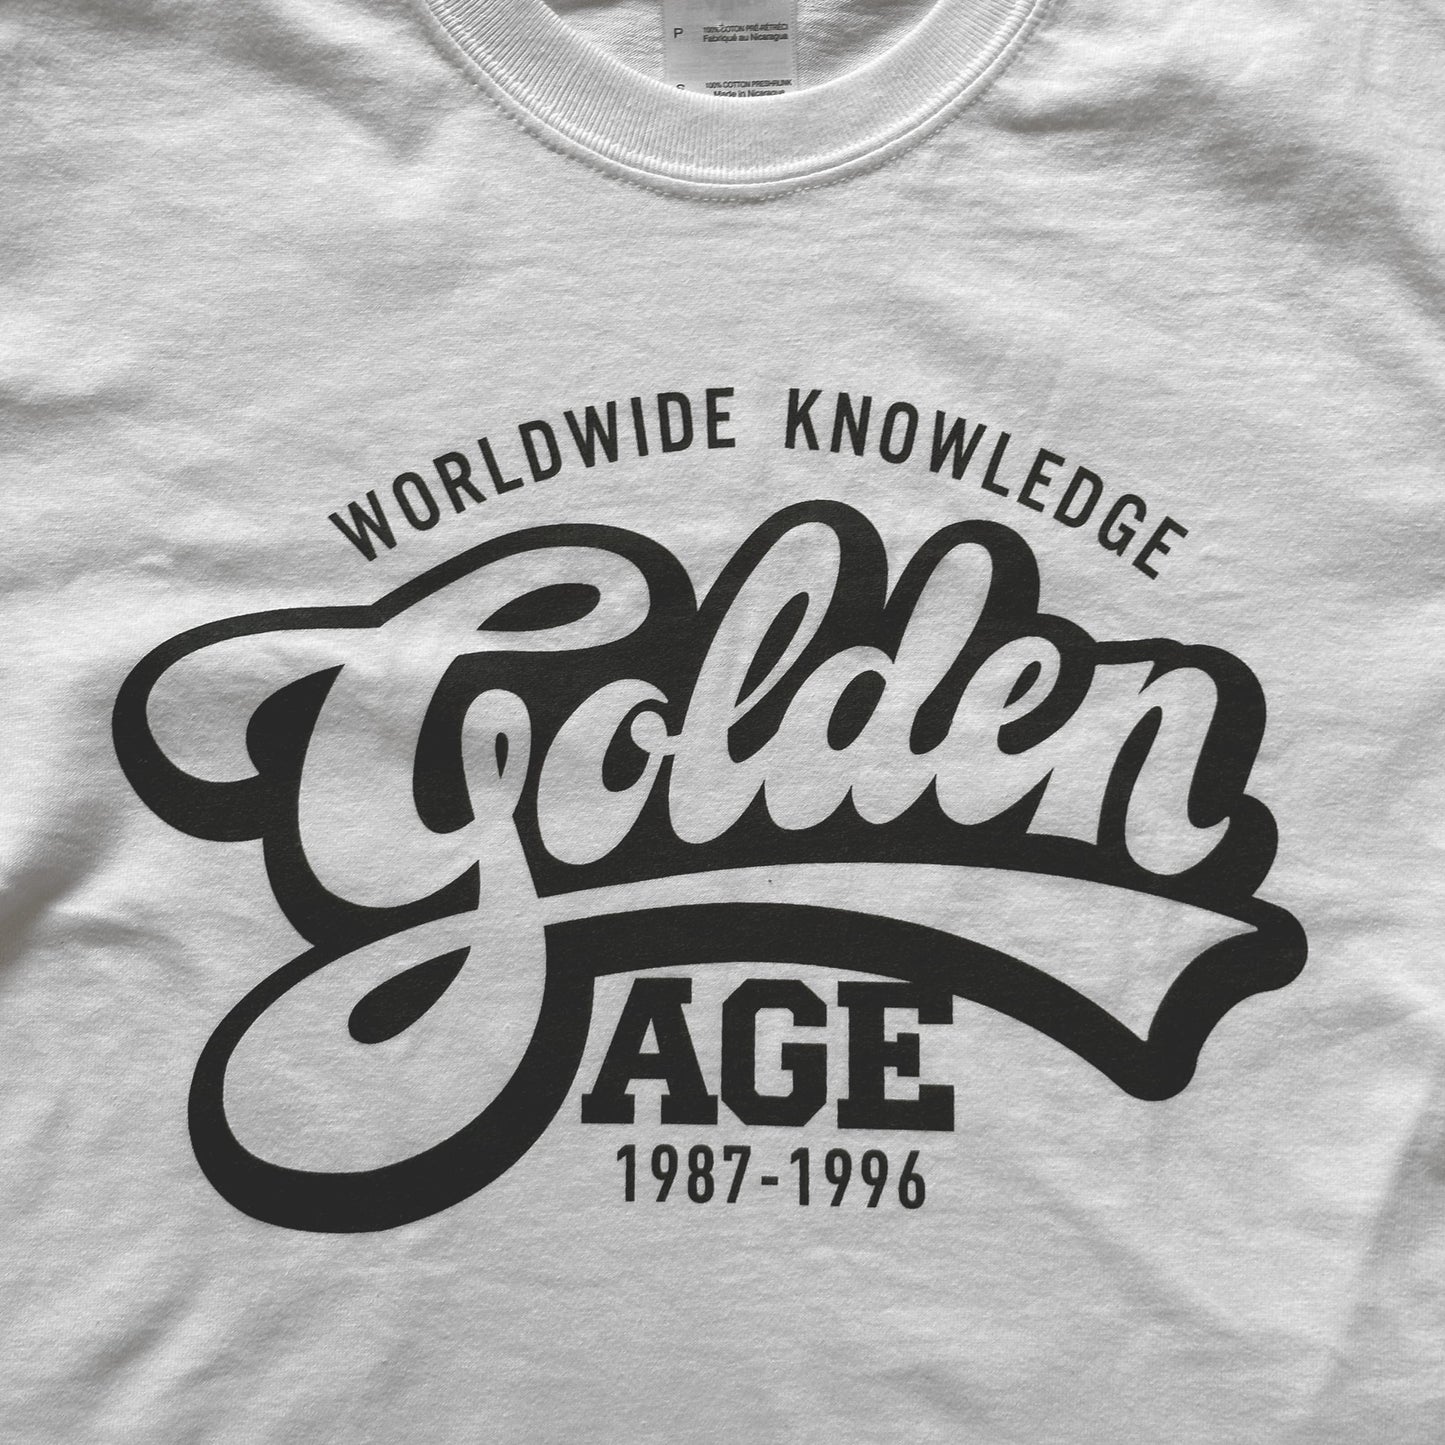 Golden Age Outline Logo Tee White